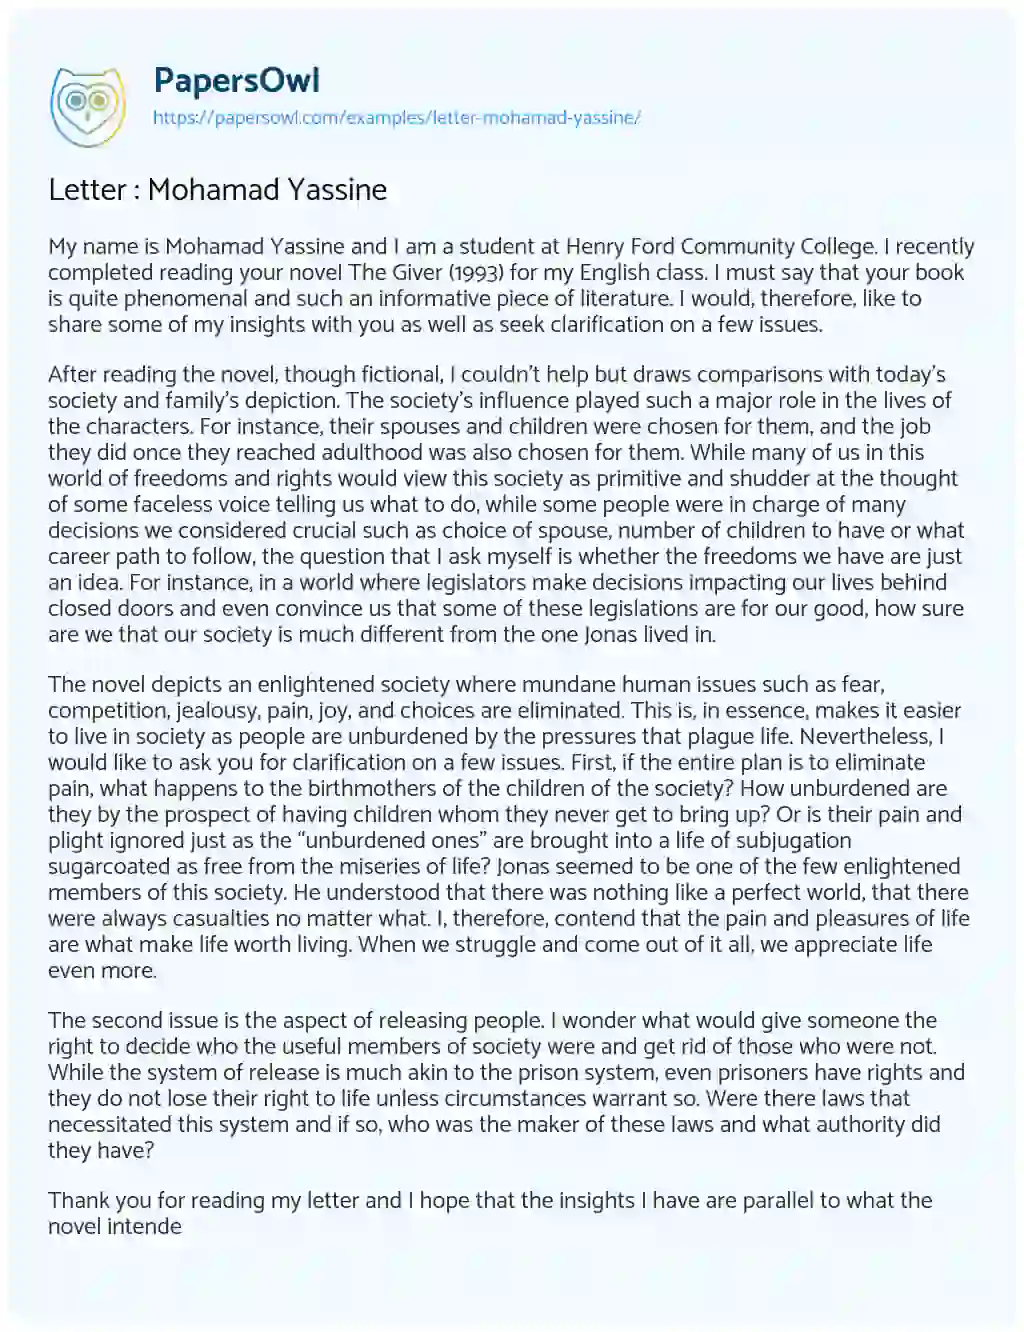 Essay on Letter : Mohamad Yassine